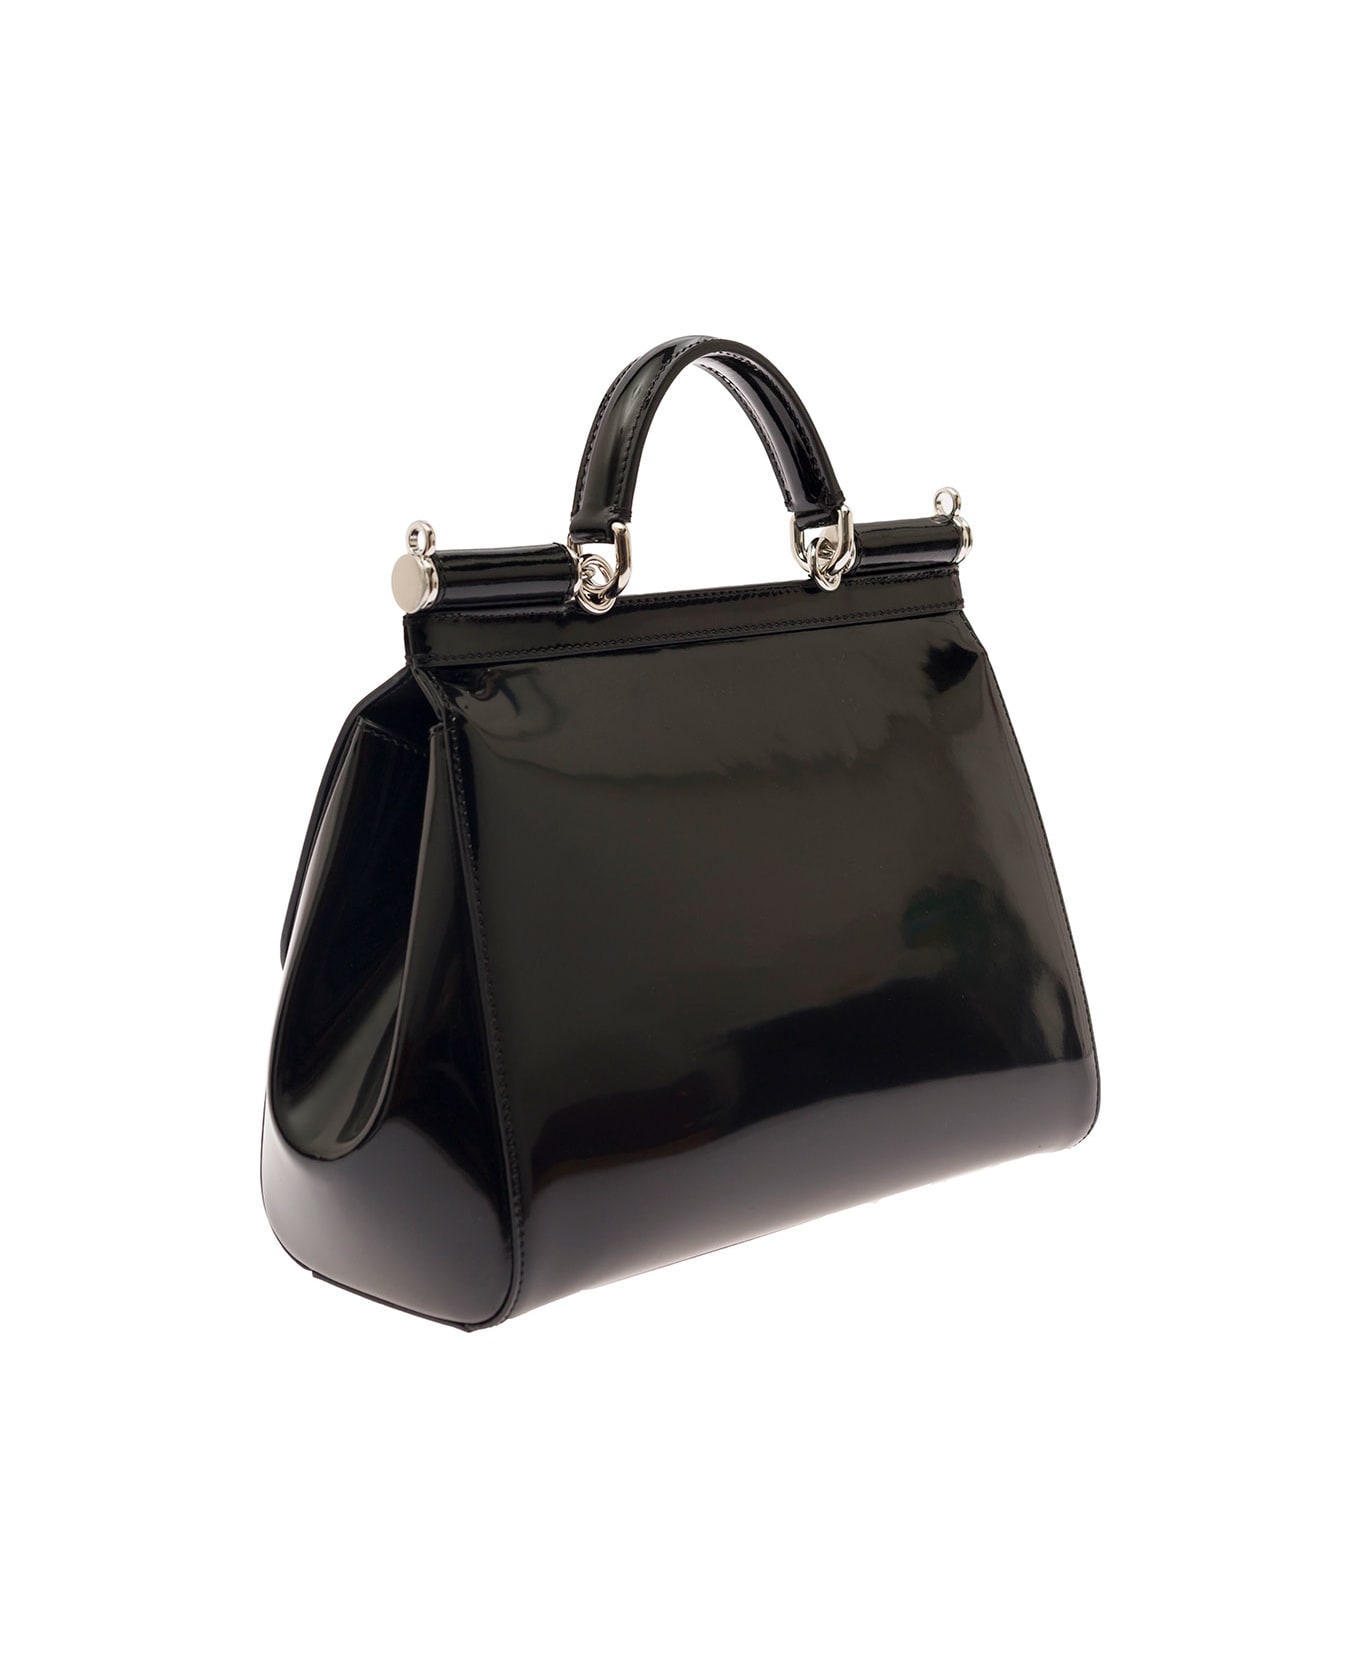 Dolce & Gabbana Black Sicily Medium Handbag In Shiny Leather Woman - Black トートバッグ